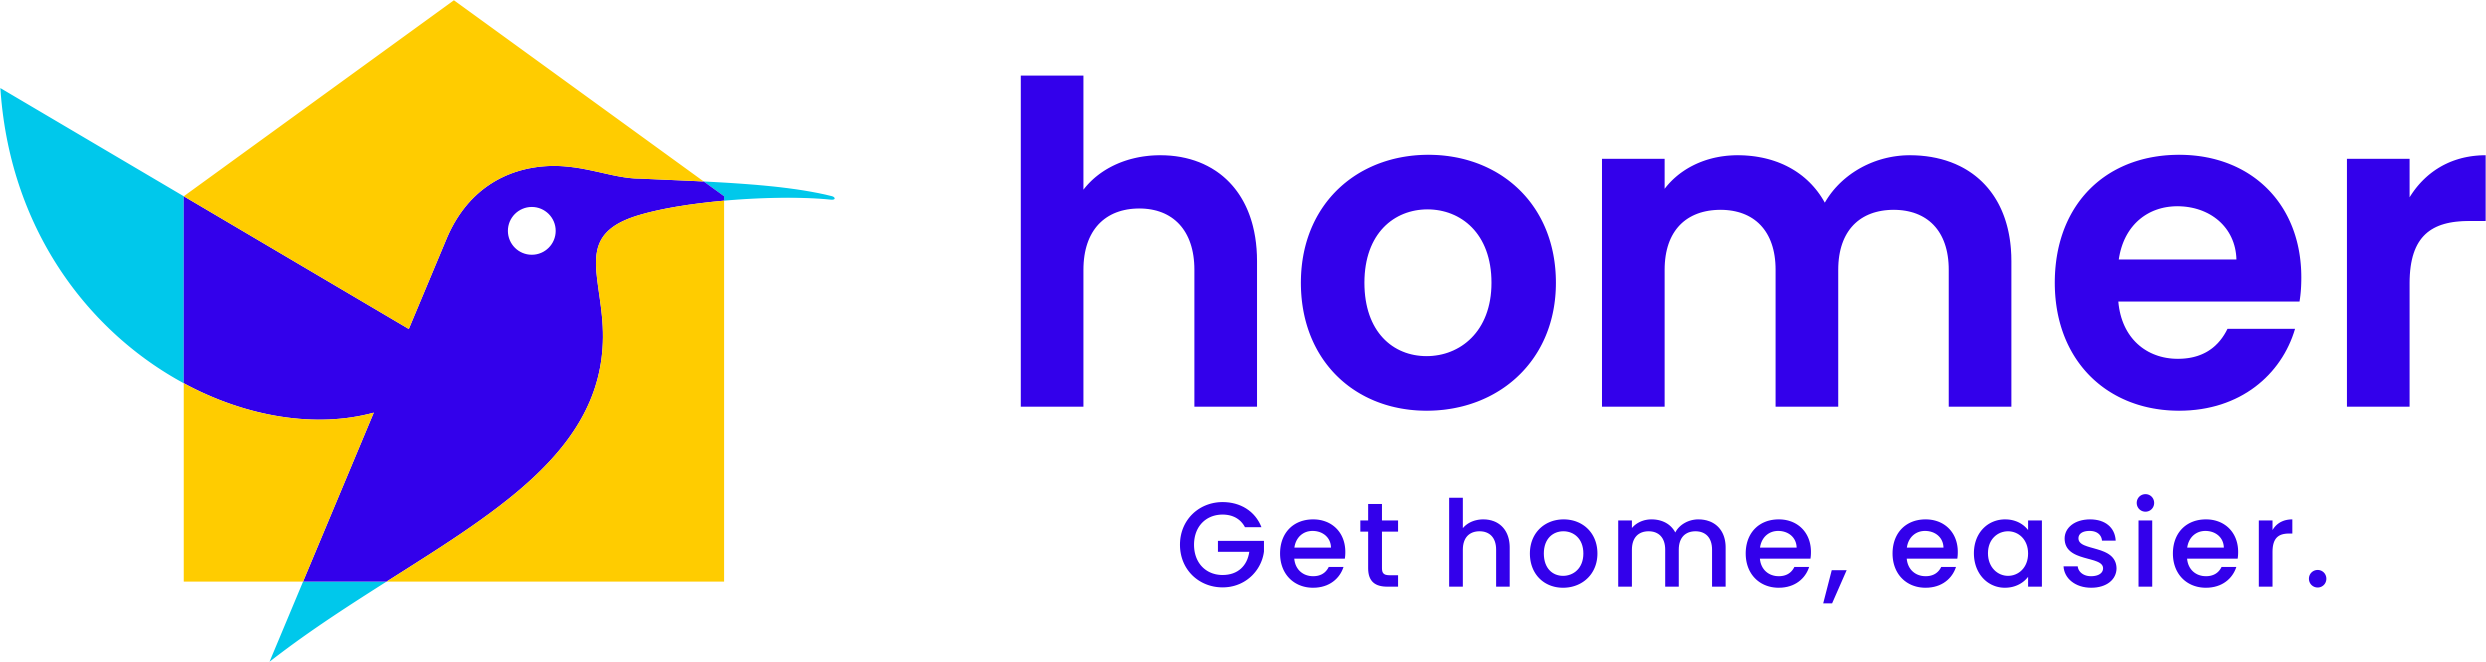 Homer logo